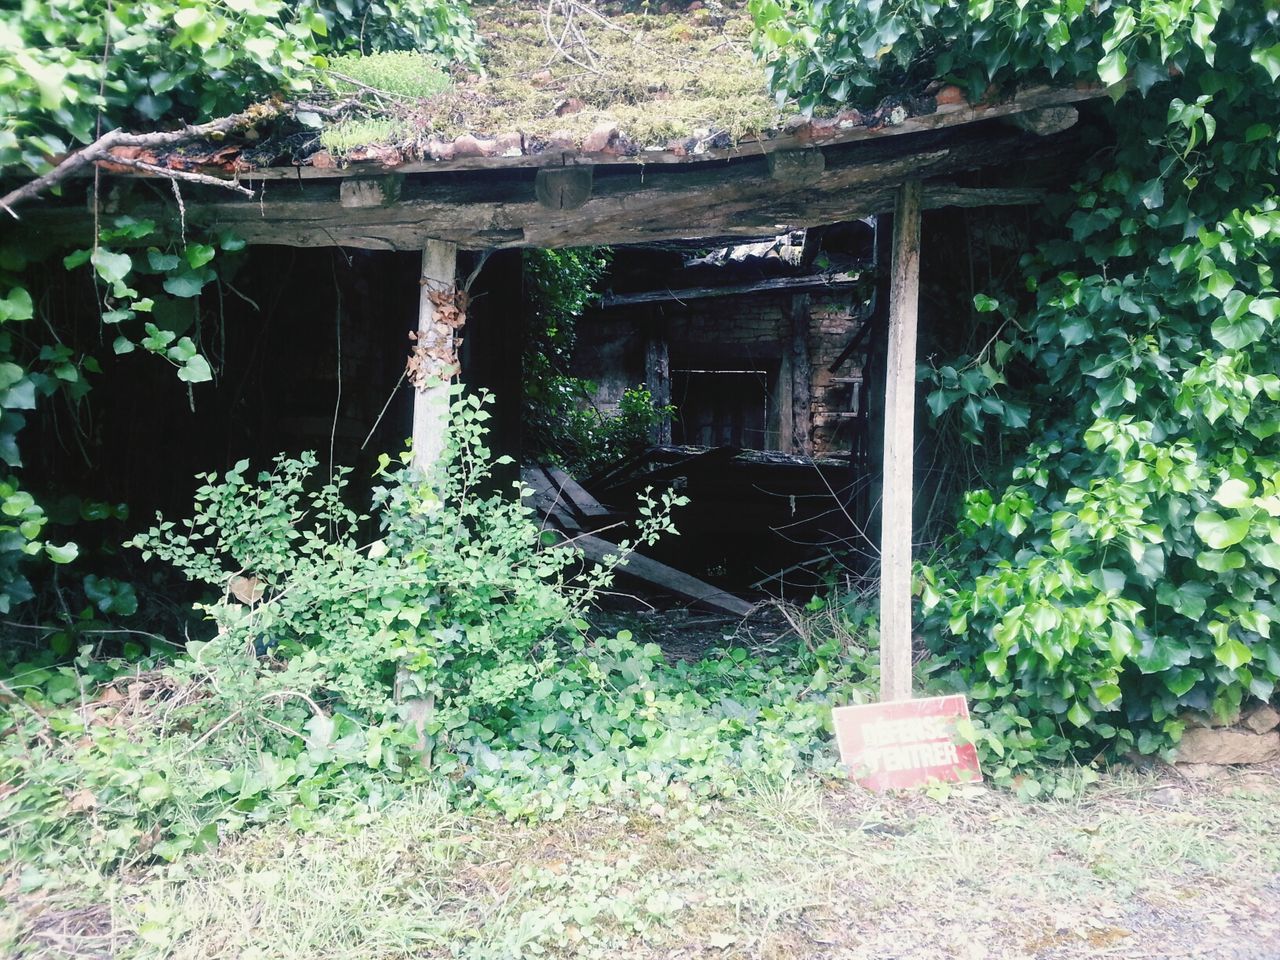 Abandoned built structure amid plants